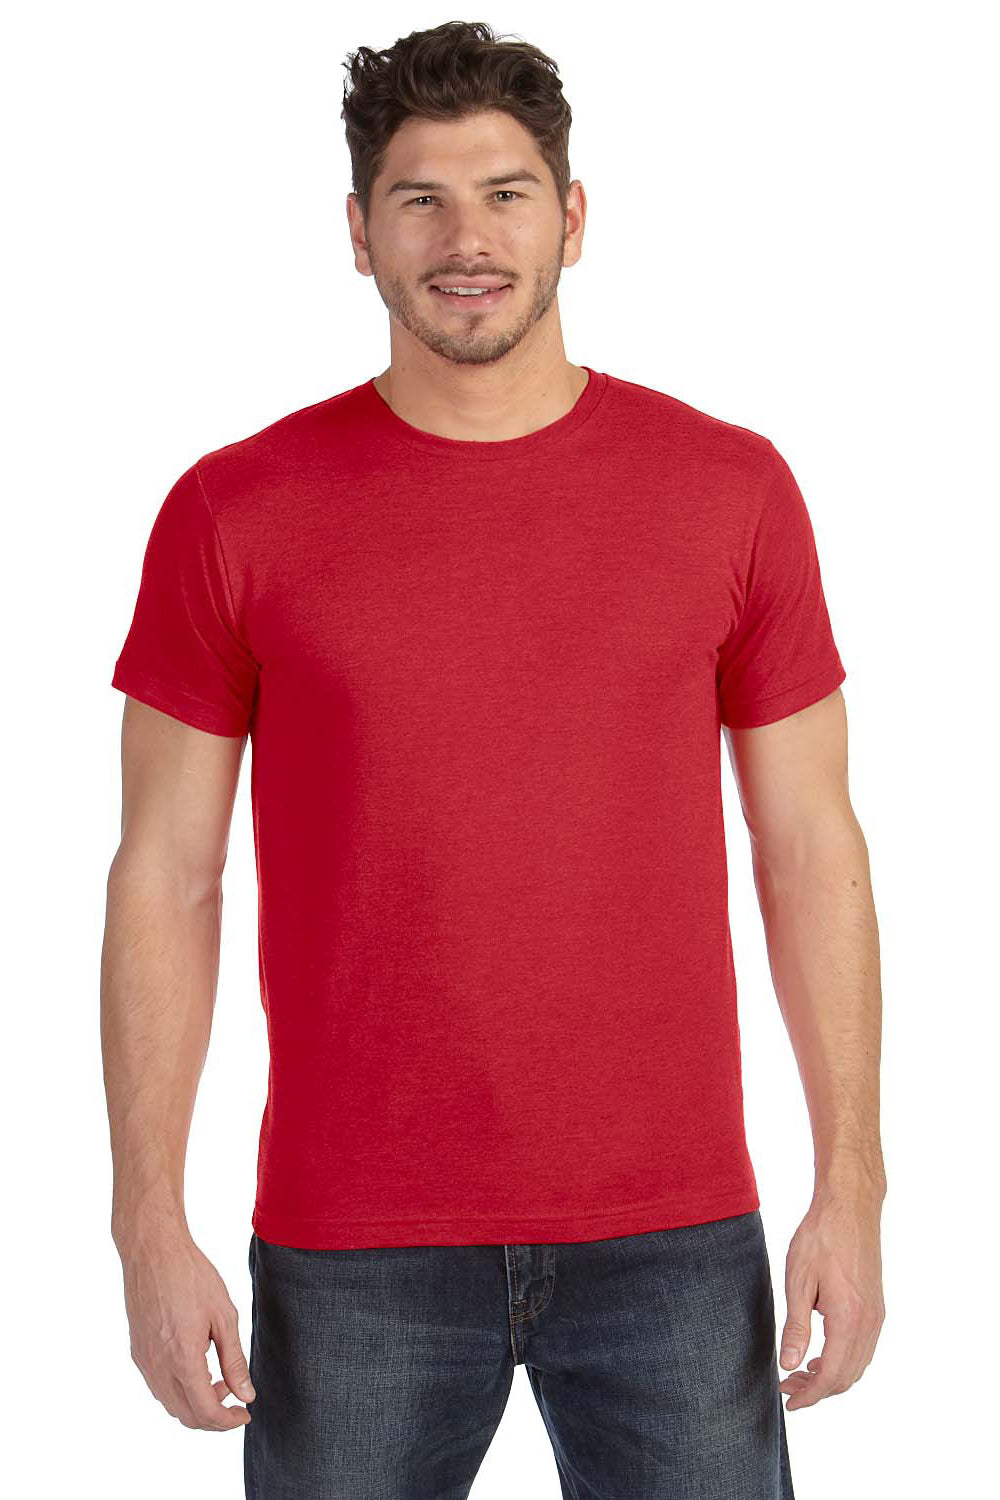 LAT 6905 Mens Fine Jersey Short Sleeve Crewneck T-Shirt Red Front